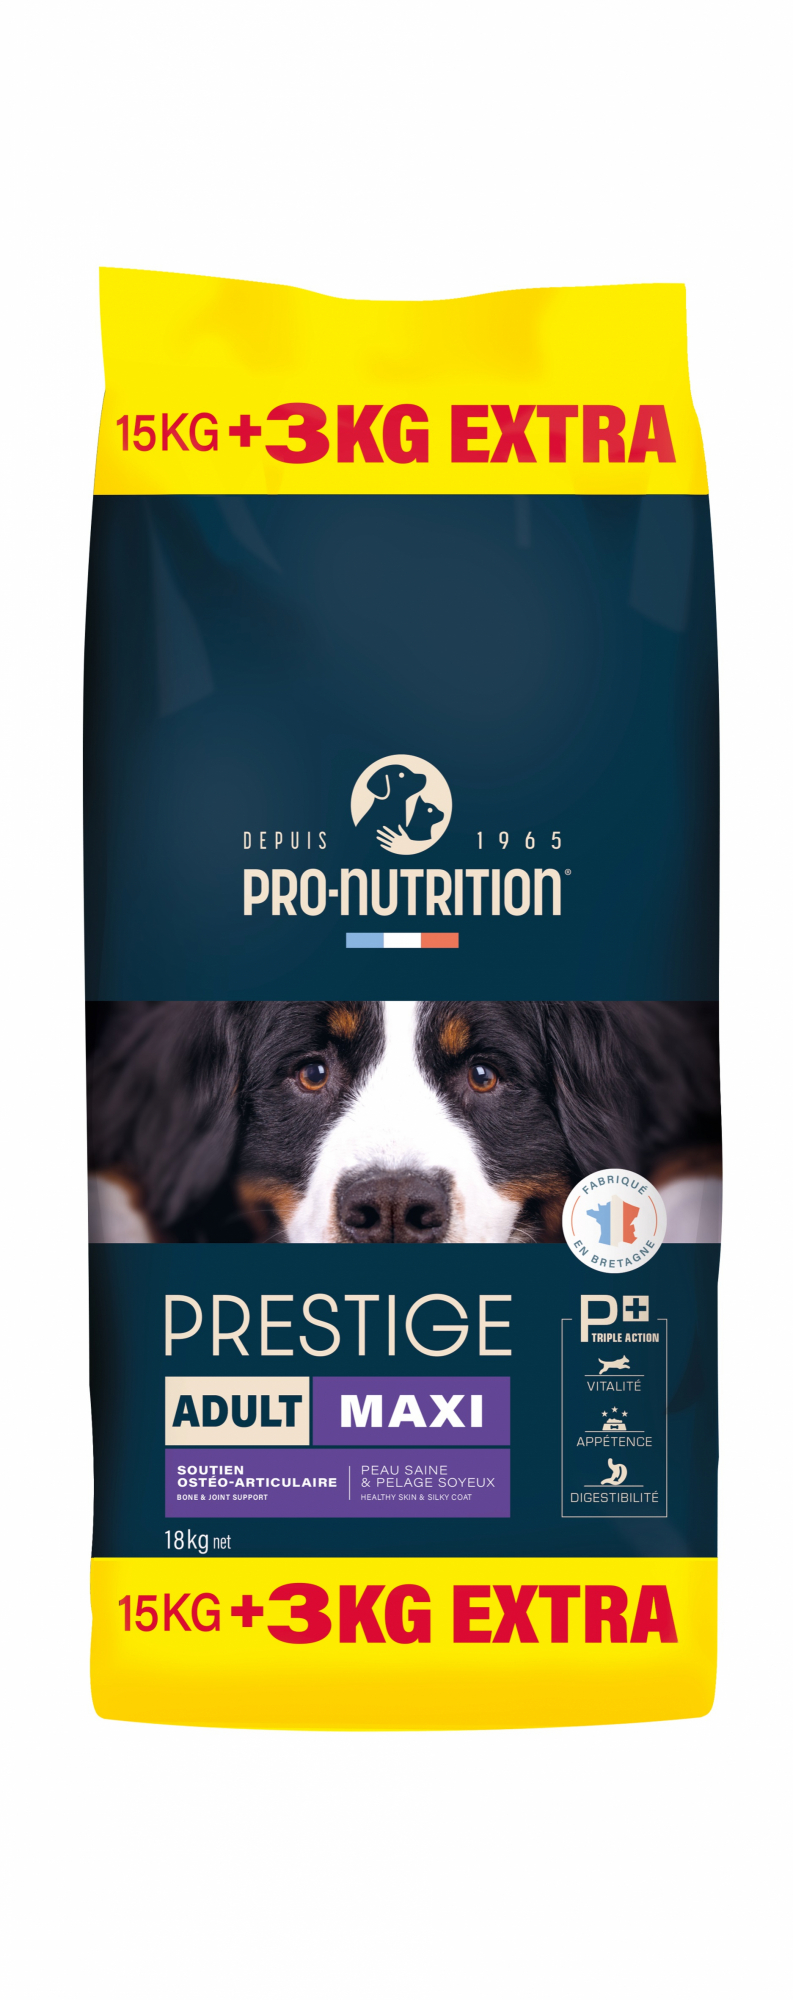 Prestige Maxi Adult für erwachsene große Hunde